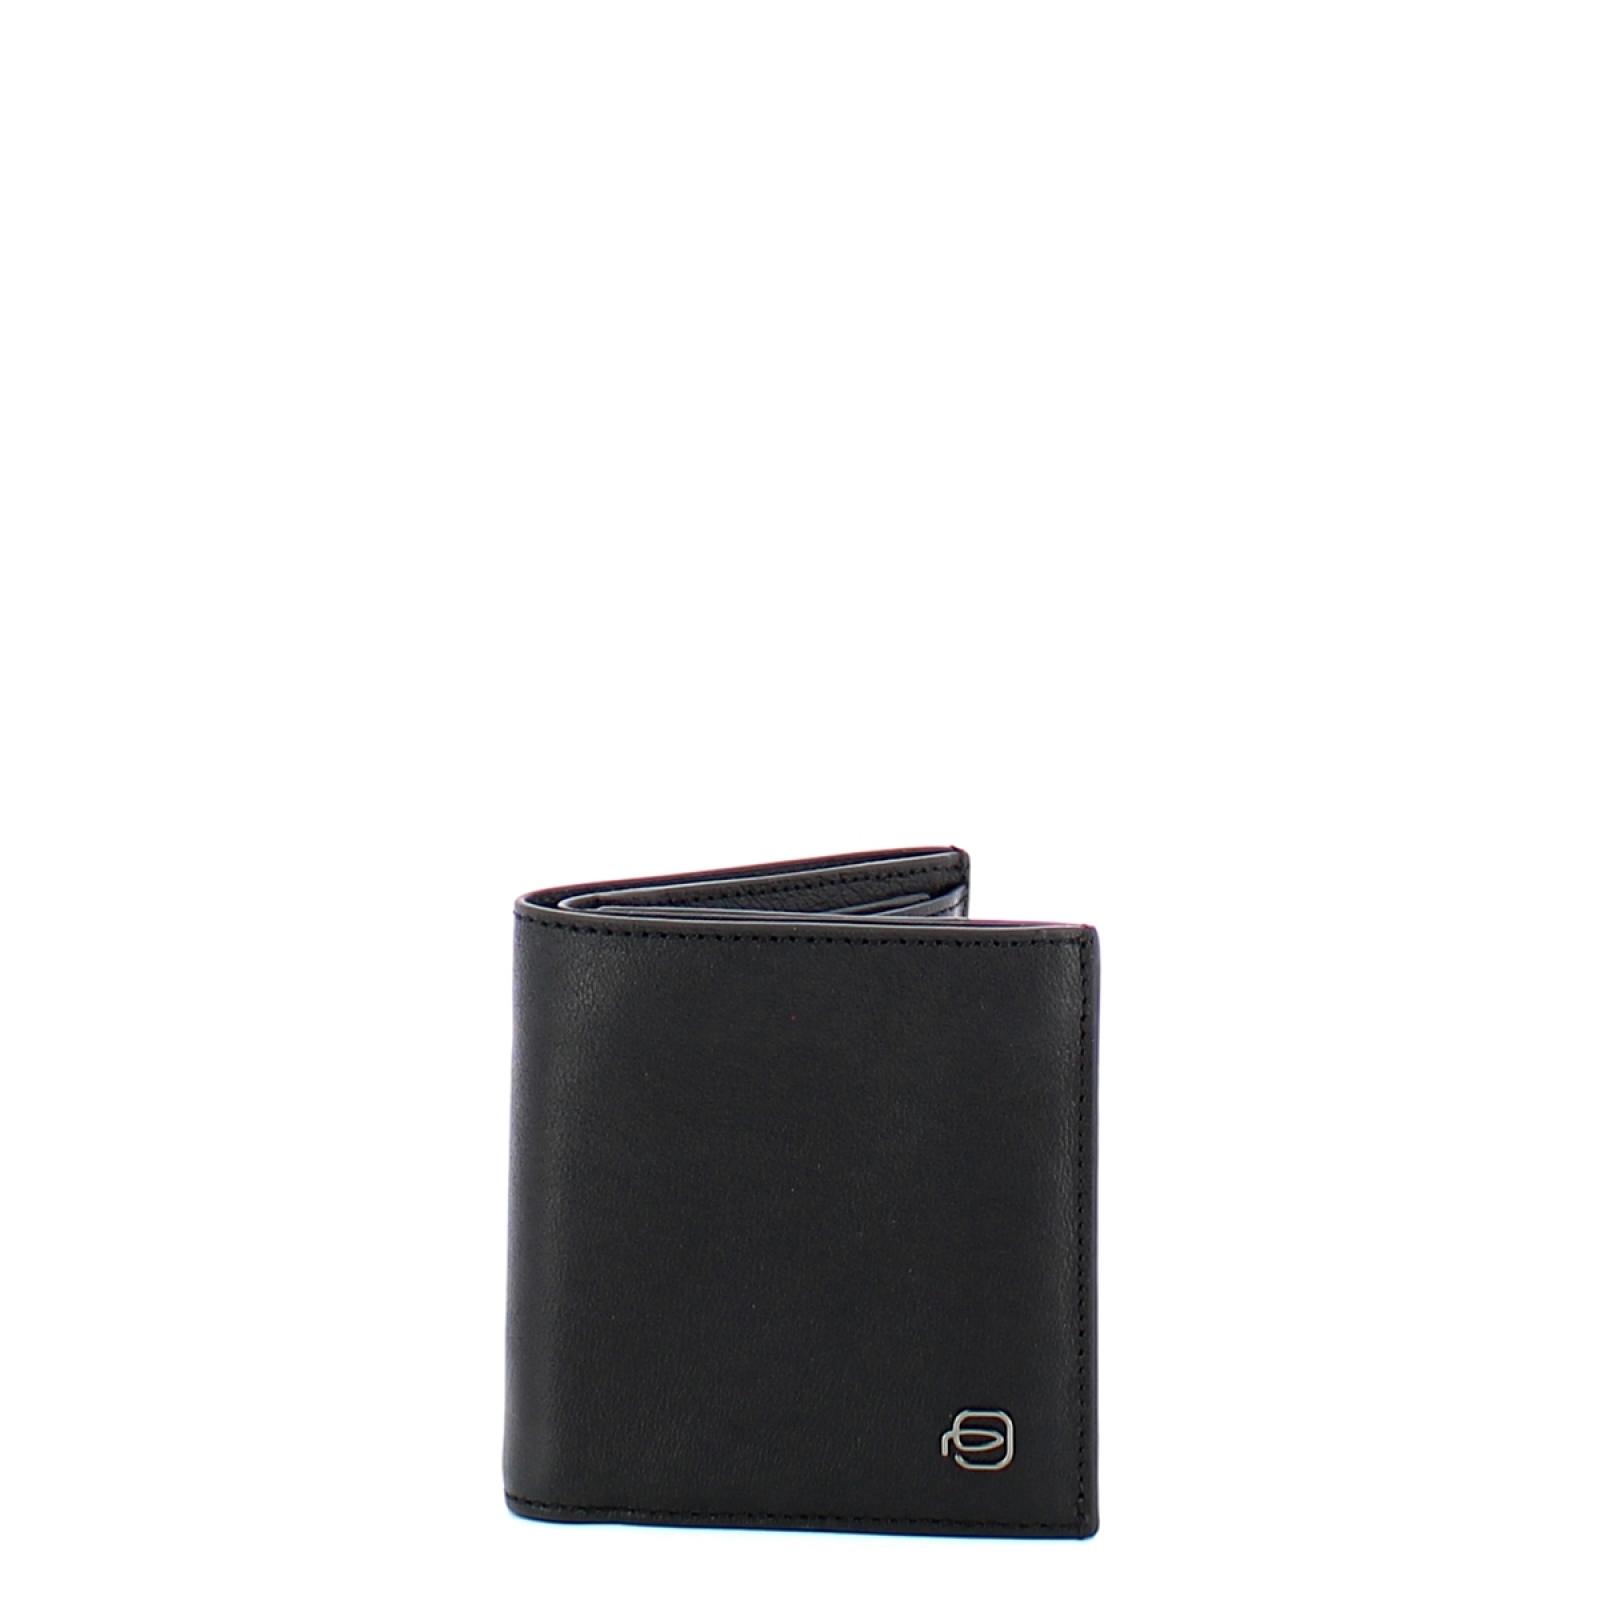 Piquadro Portafoglio pocket Black Square RFID - 1